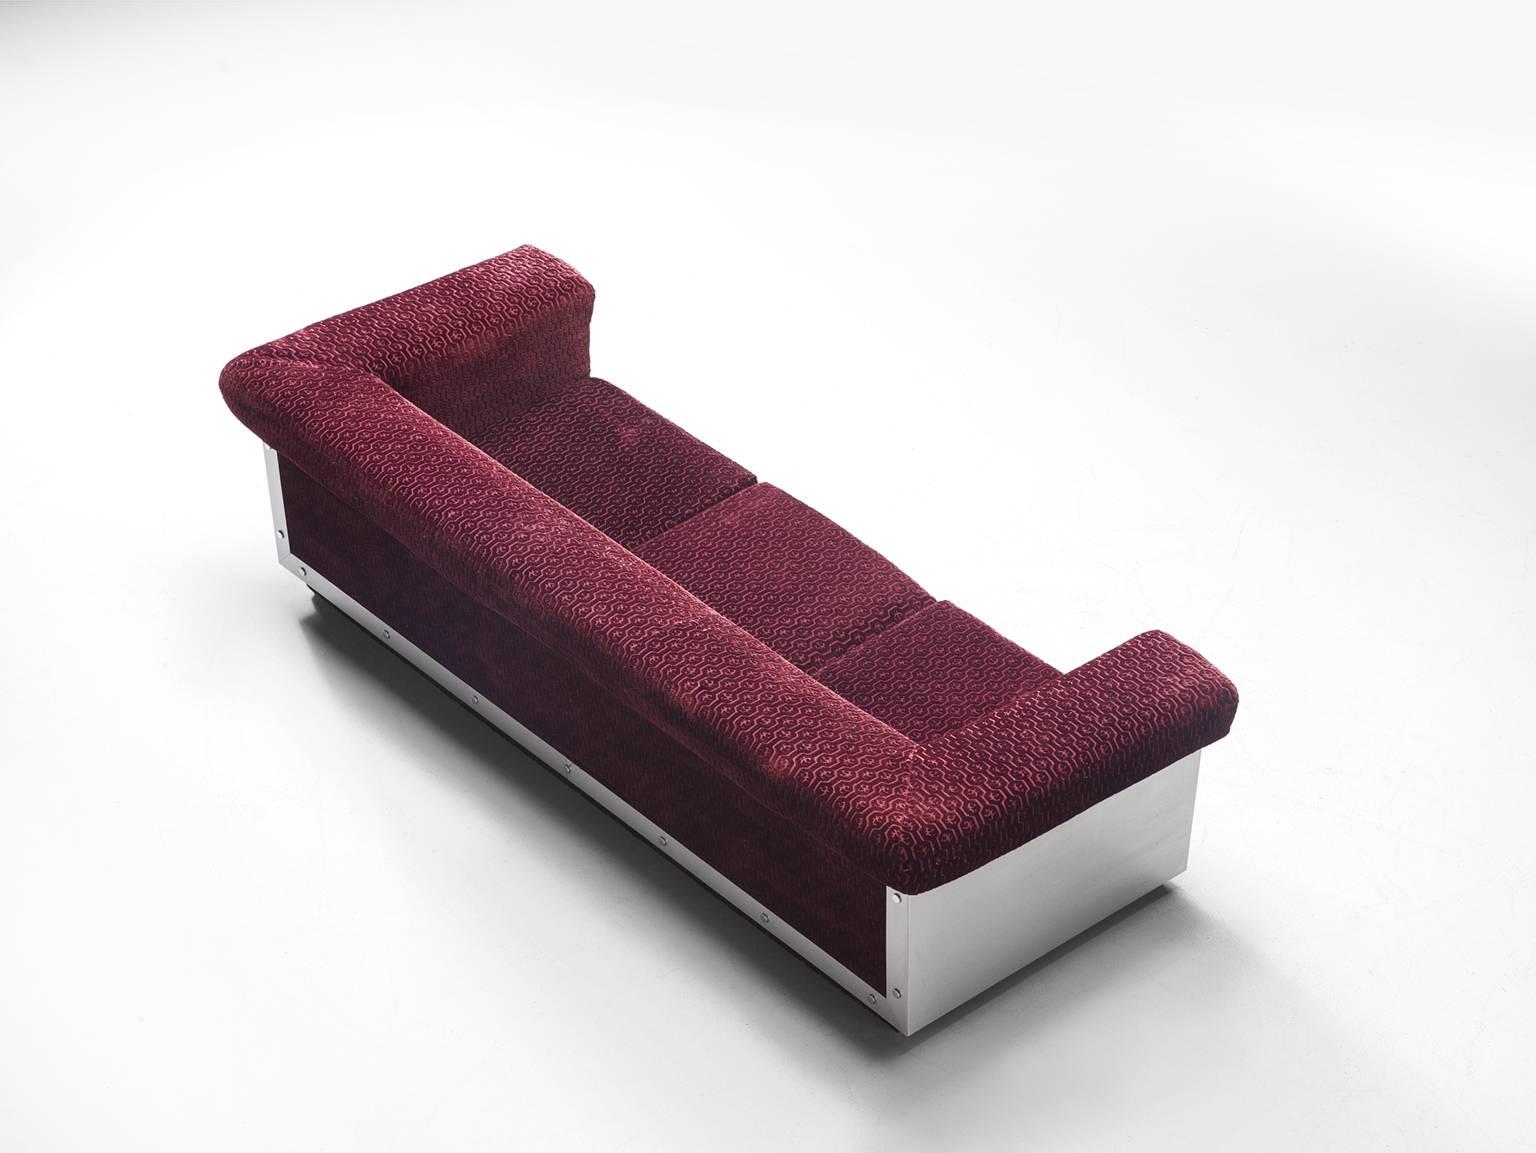 Mid-20th Century French Sofa in Stainless Steel and Burgundy Velvet Upholstery